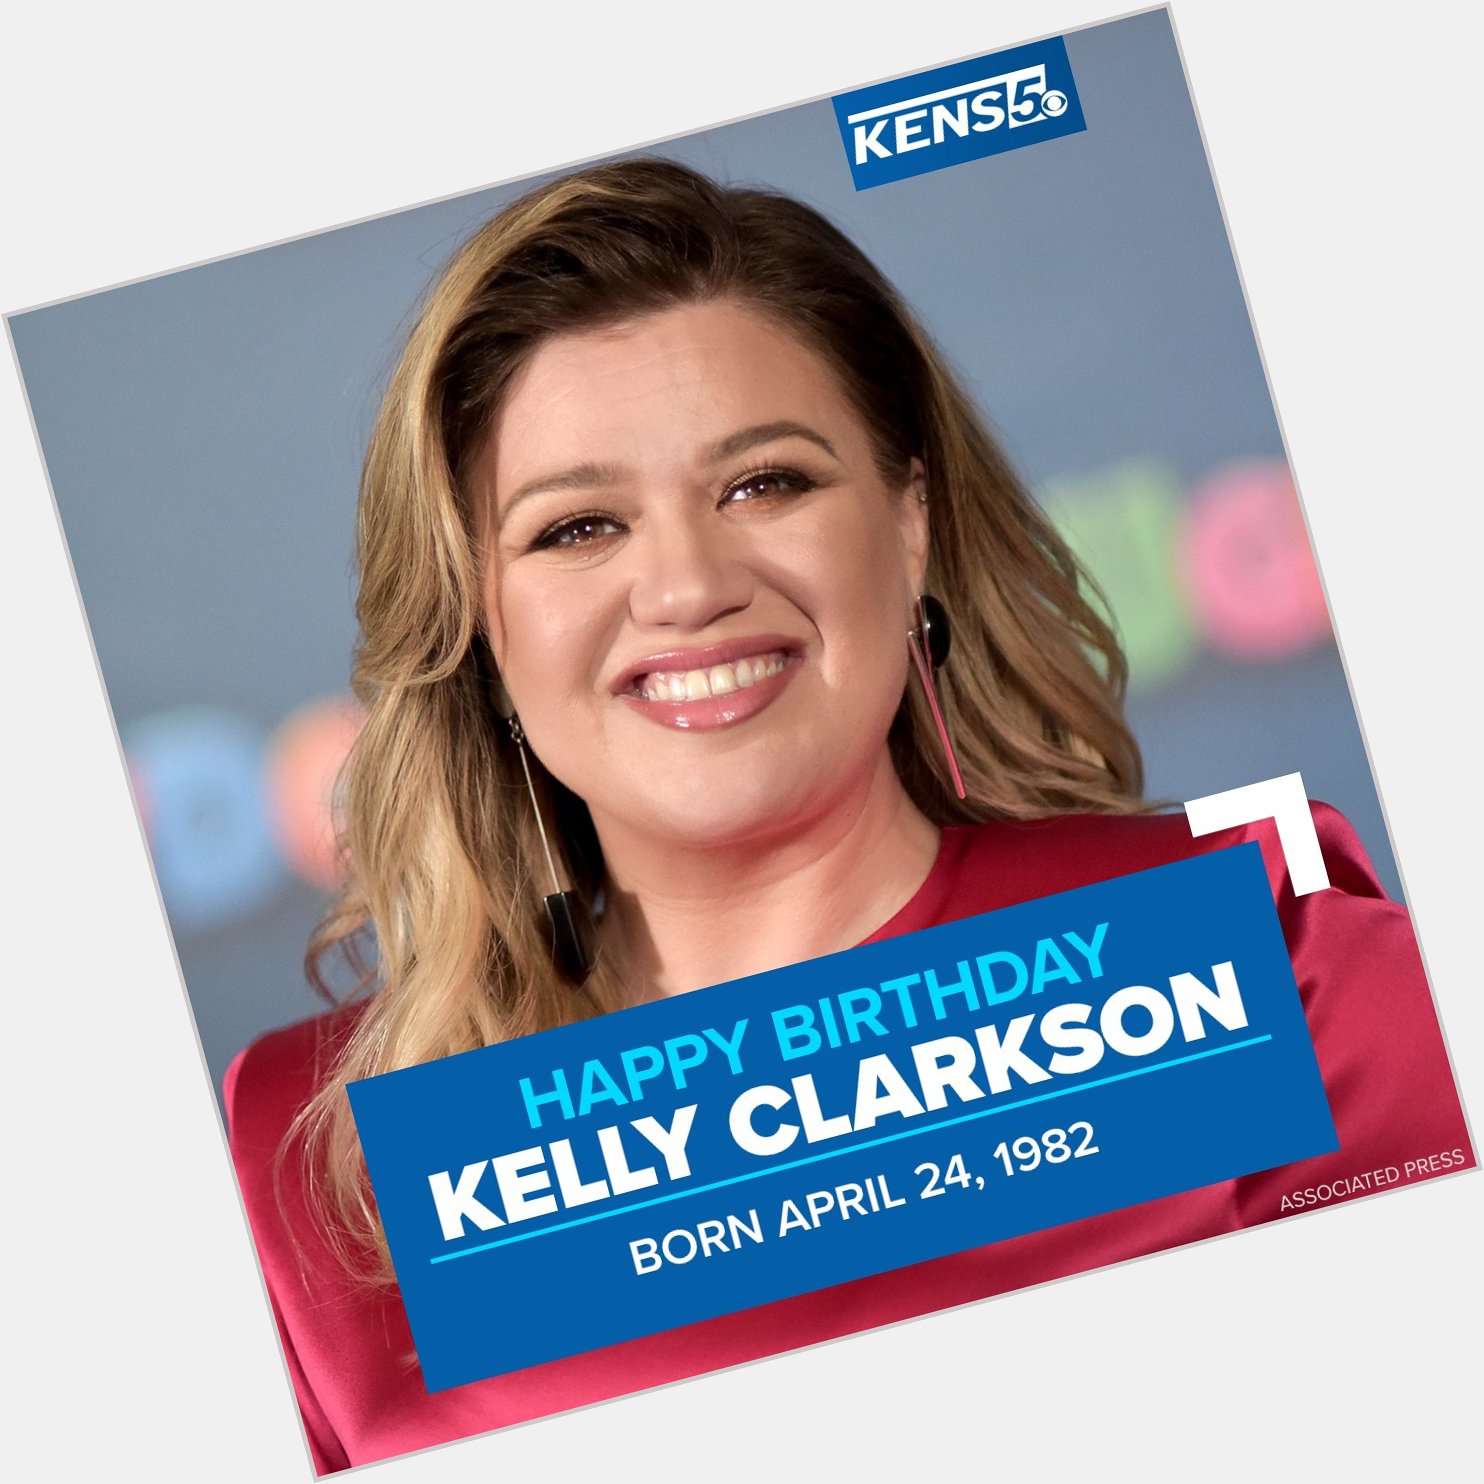 HAPPY BIRTHDAY! Texas\ own Kelly Clarkson is celebrating her 41st birthday today!  

 